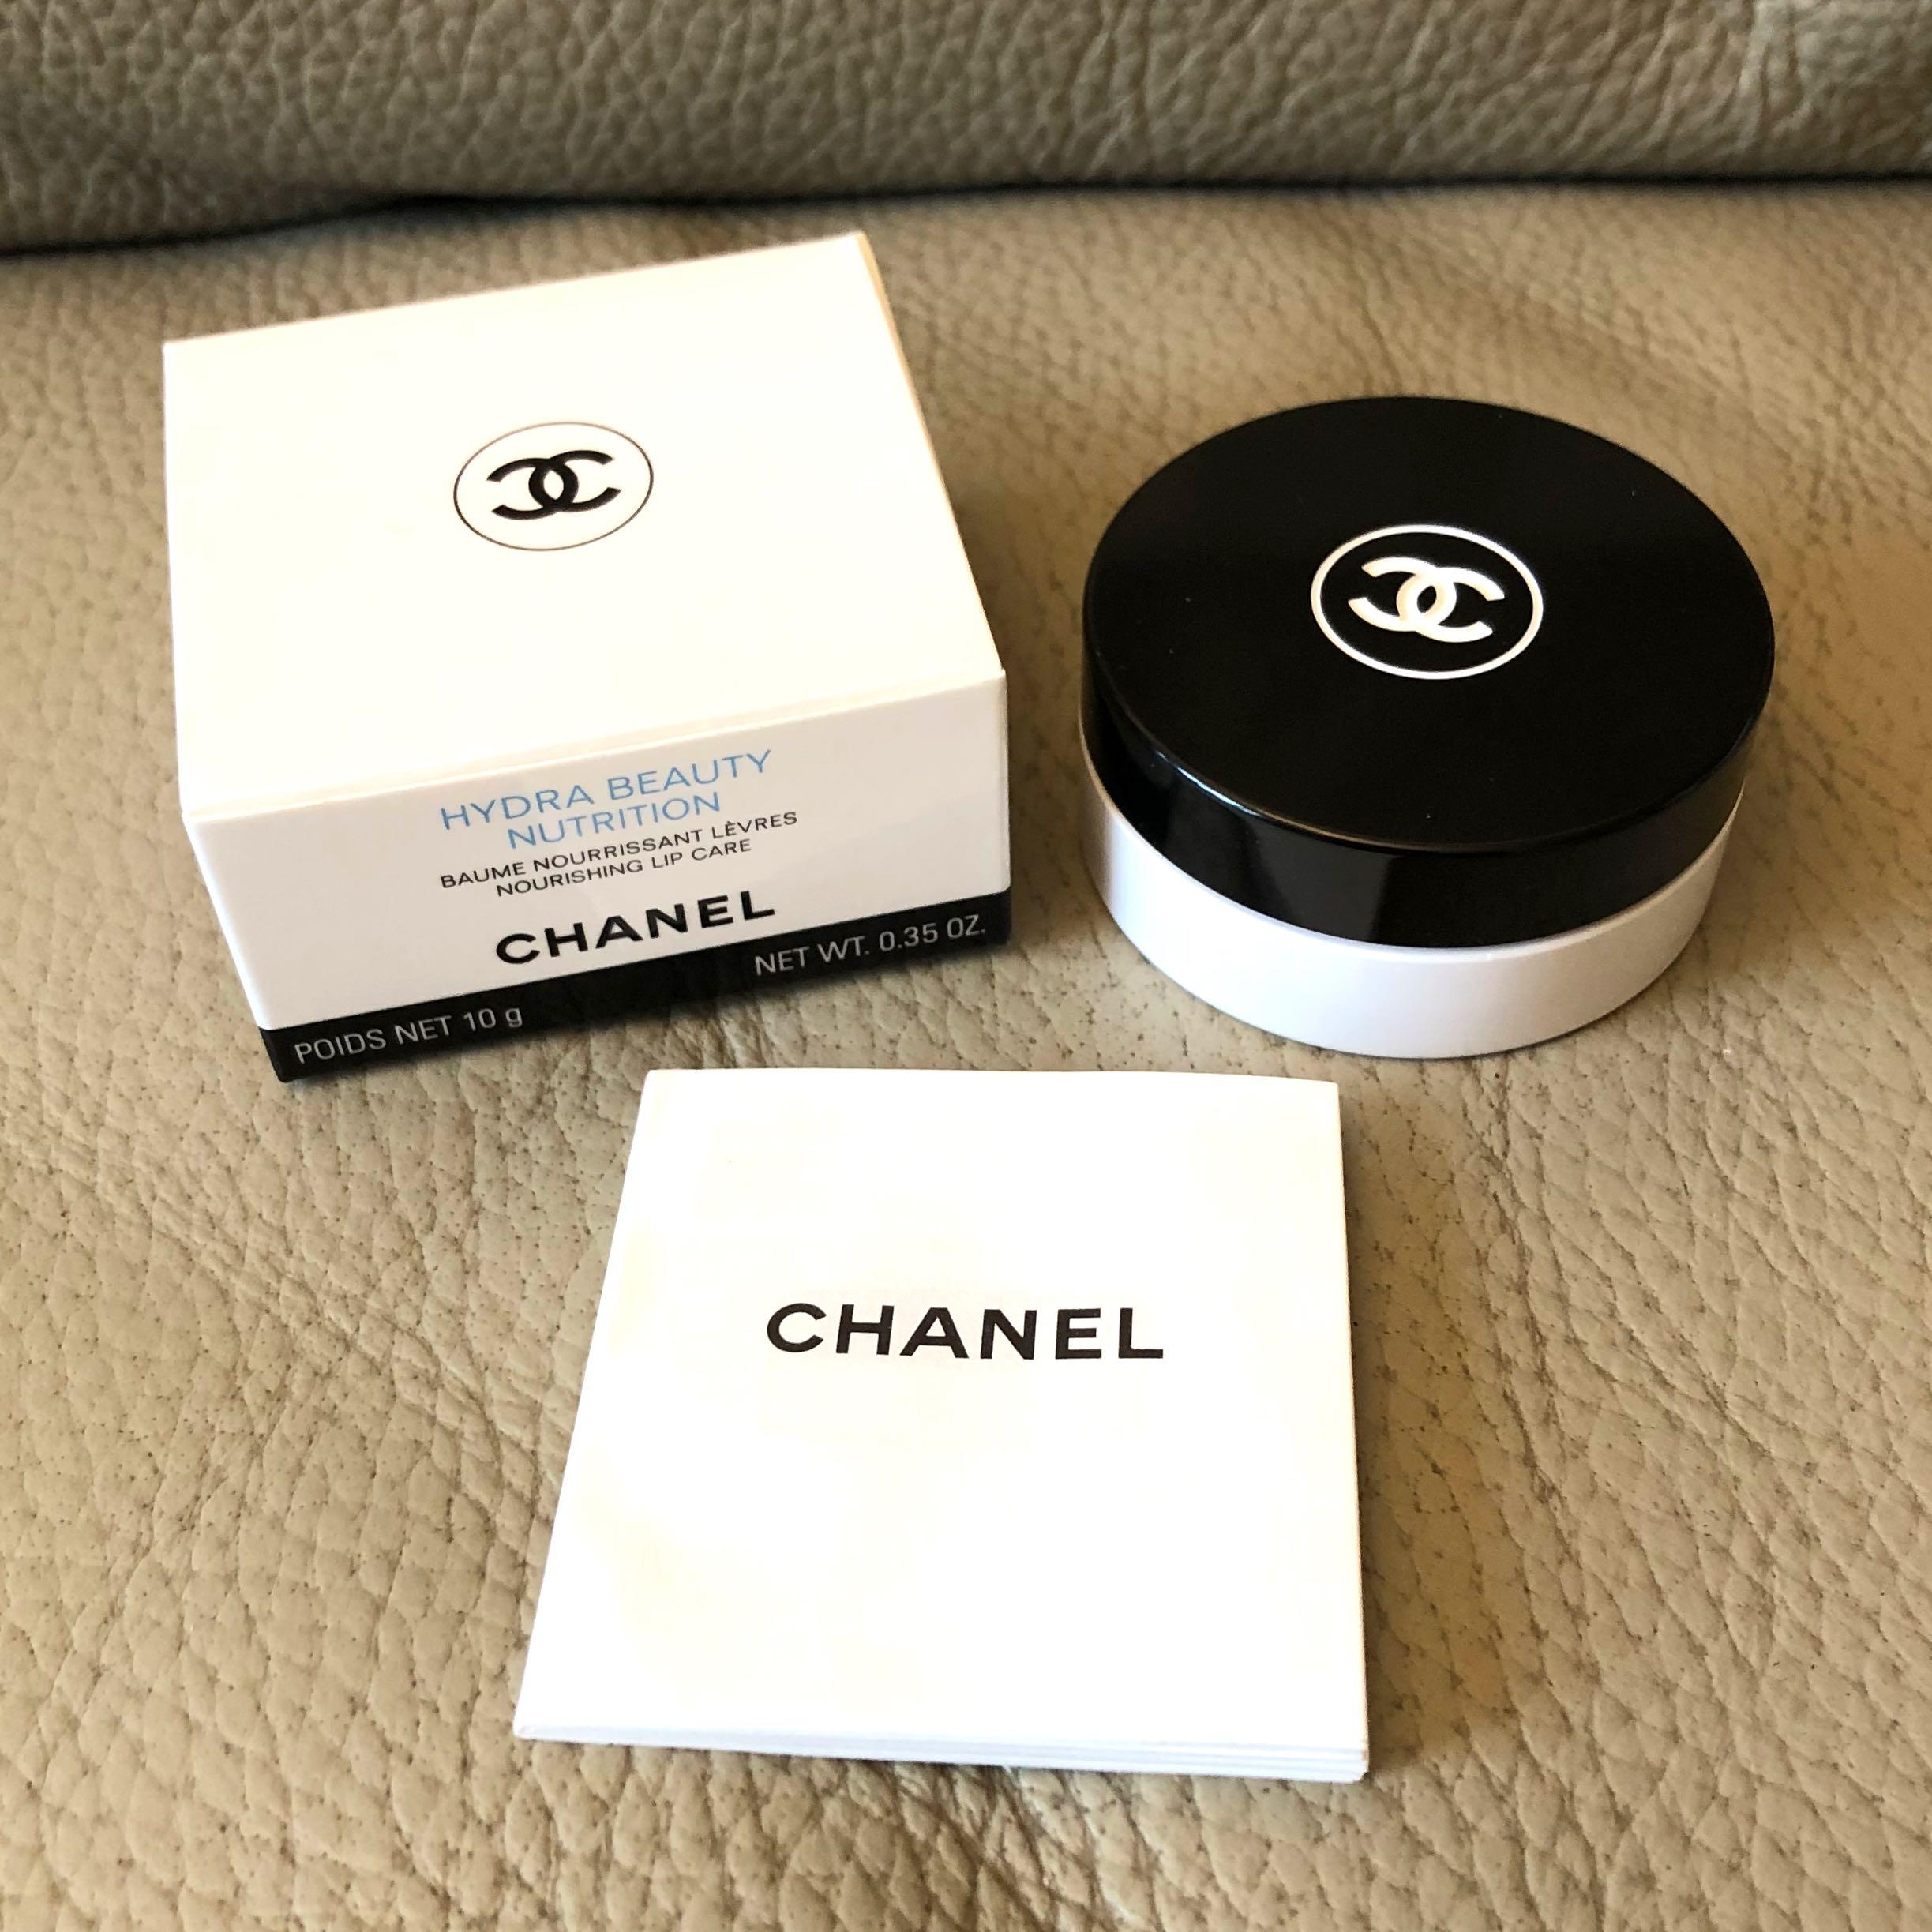 Buy Chanel Hydra Beauty Nutrition Nourishing & Protective Cream